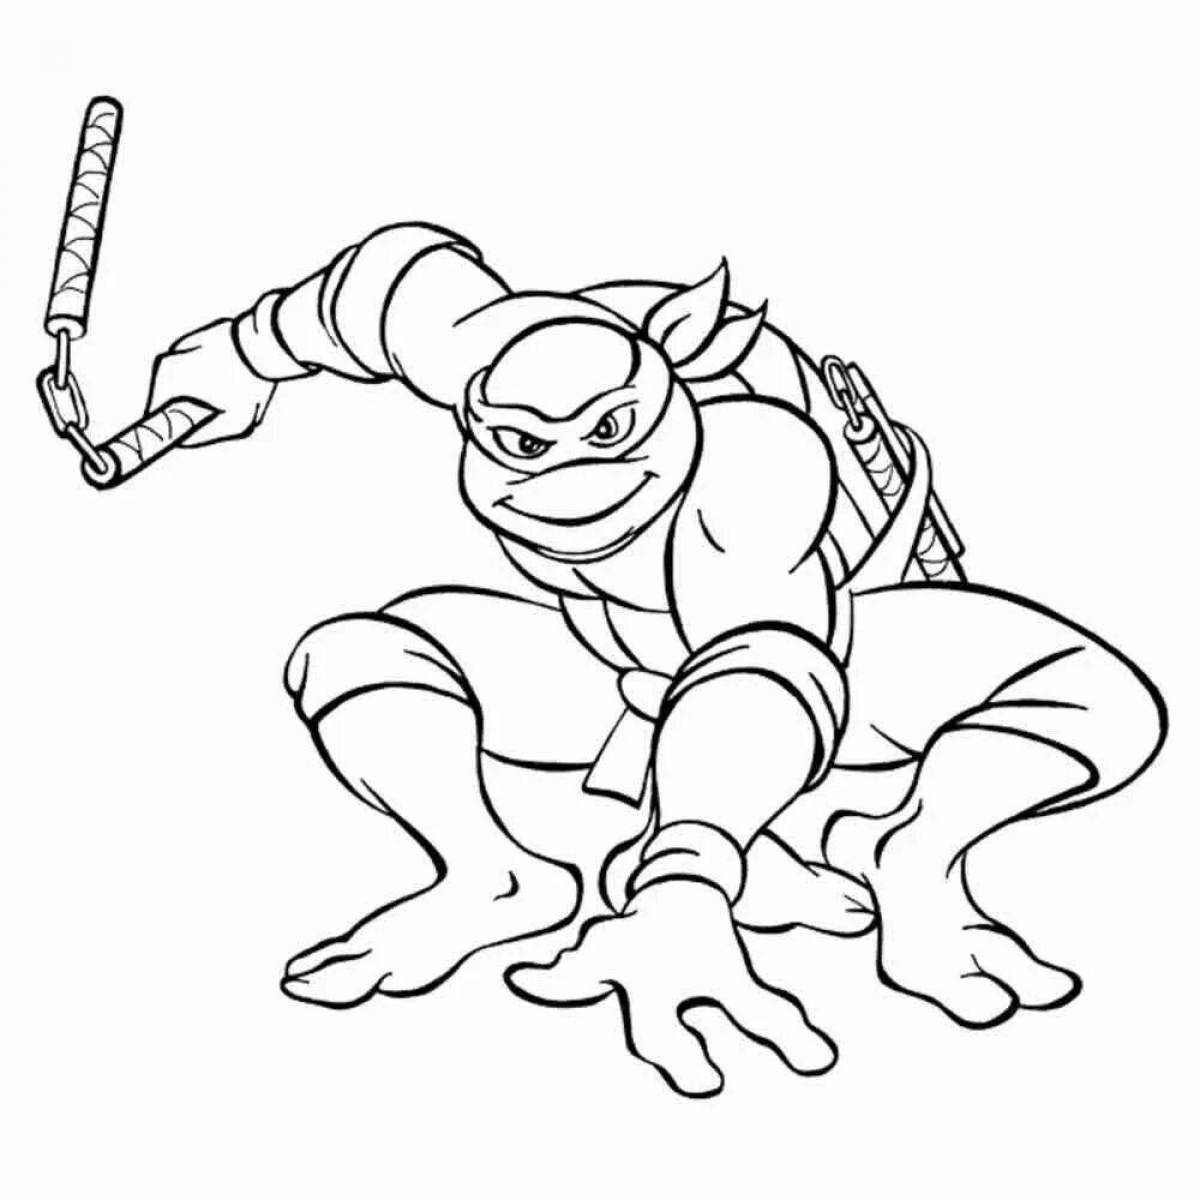 Fun gujitsu heroes coloring page for kids